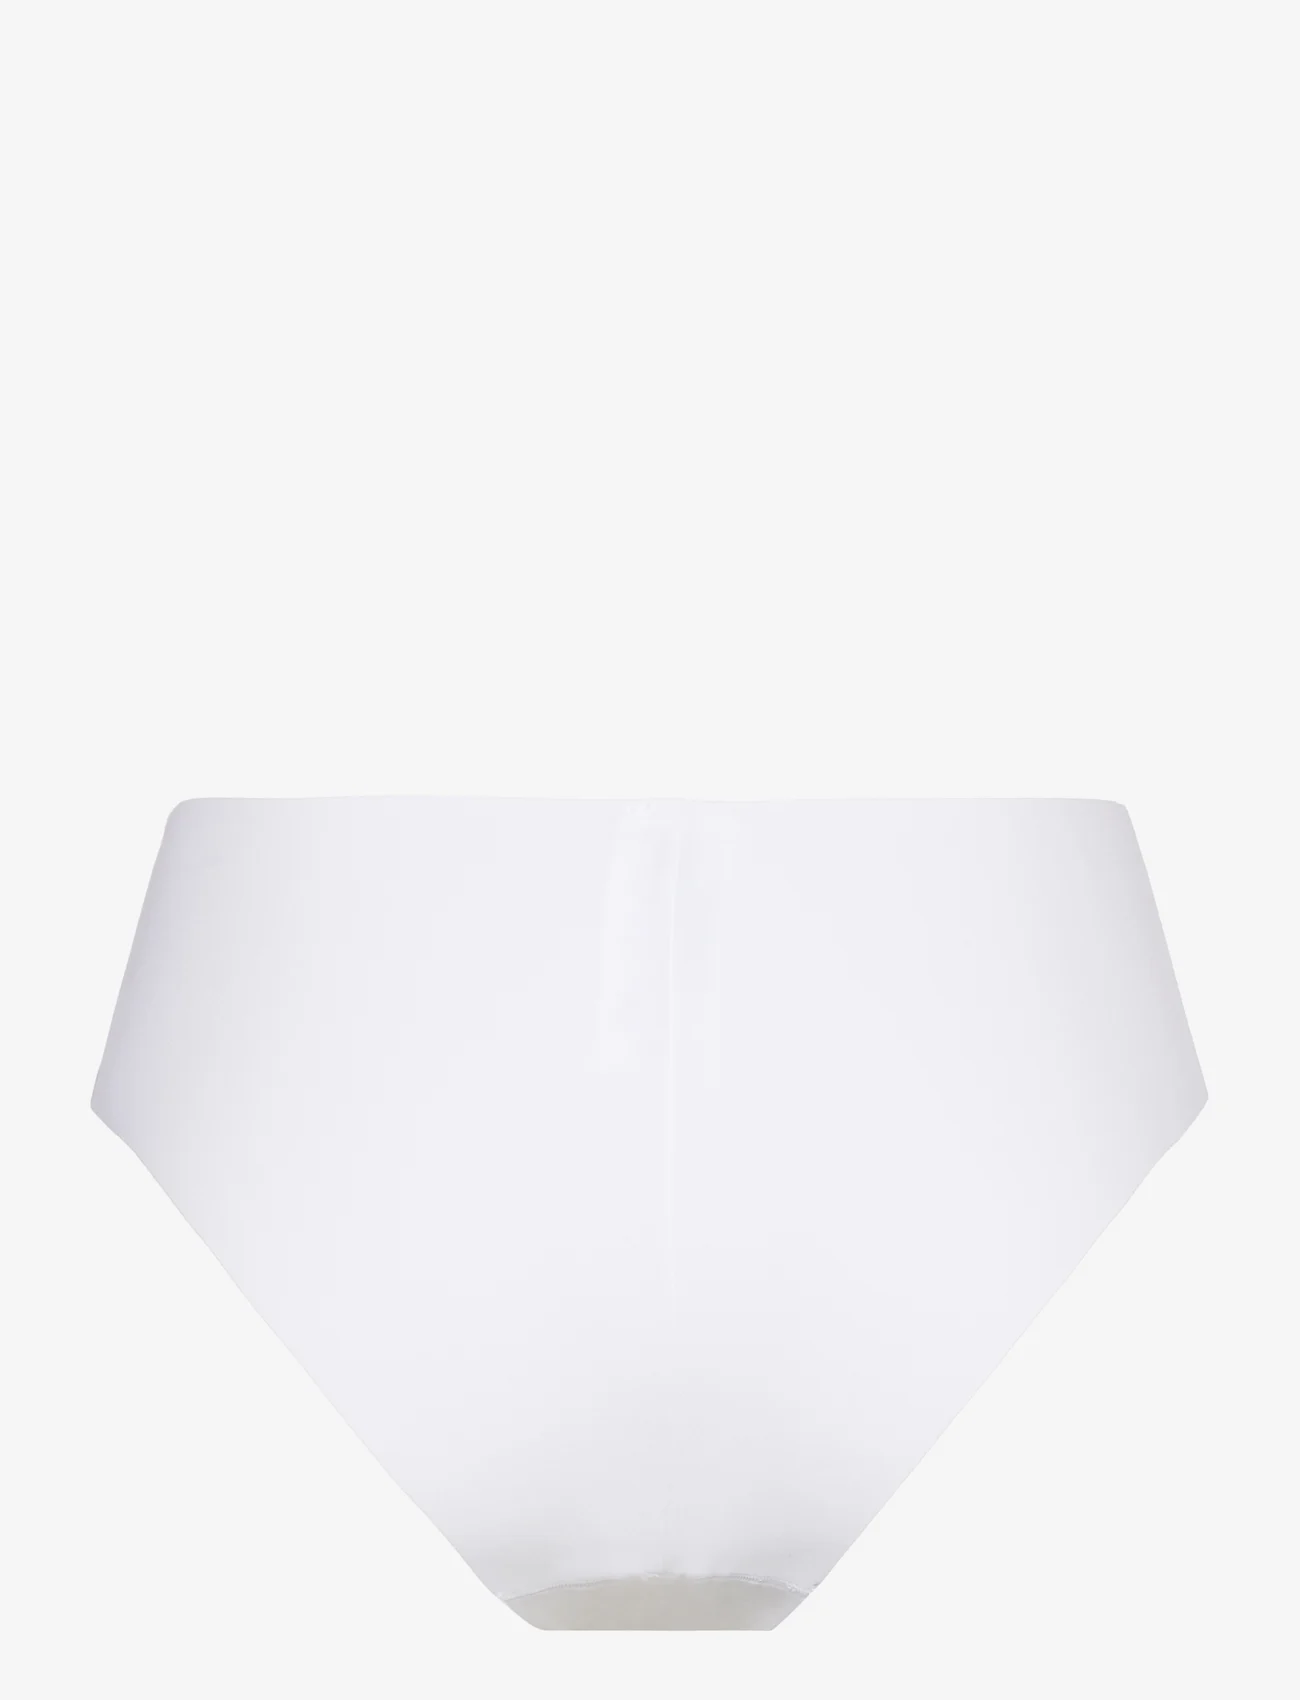 adidas Underwear - Brazilian Pants - naadloze slips - white - 1